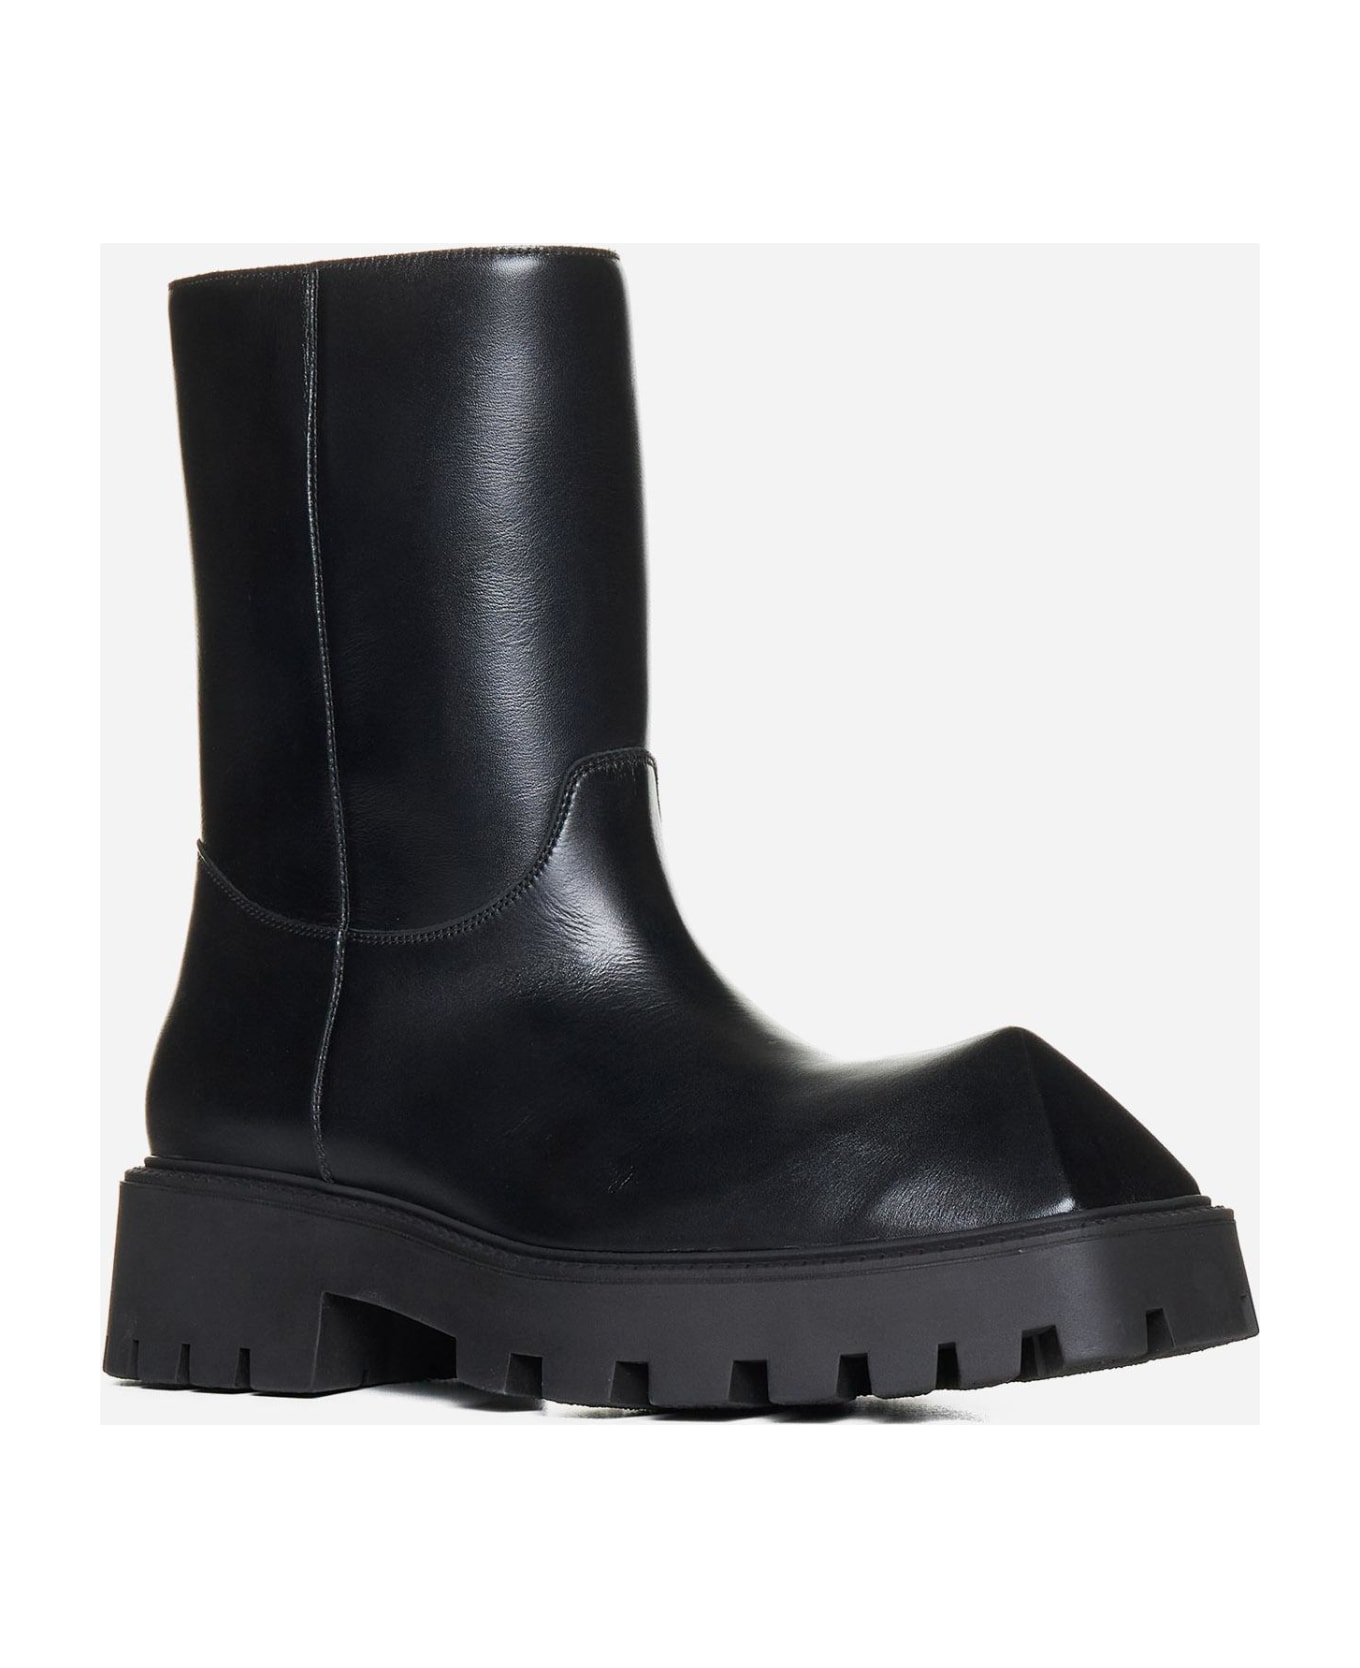 Balenciaga Rhino Leather Ankle Boots - Black ブーツ